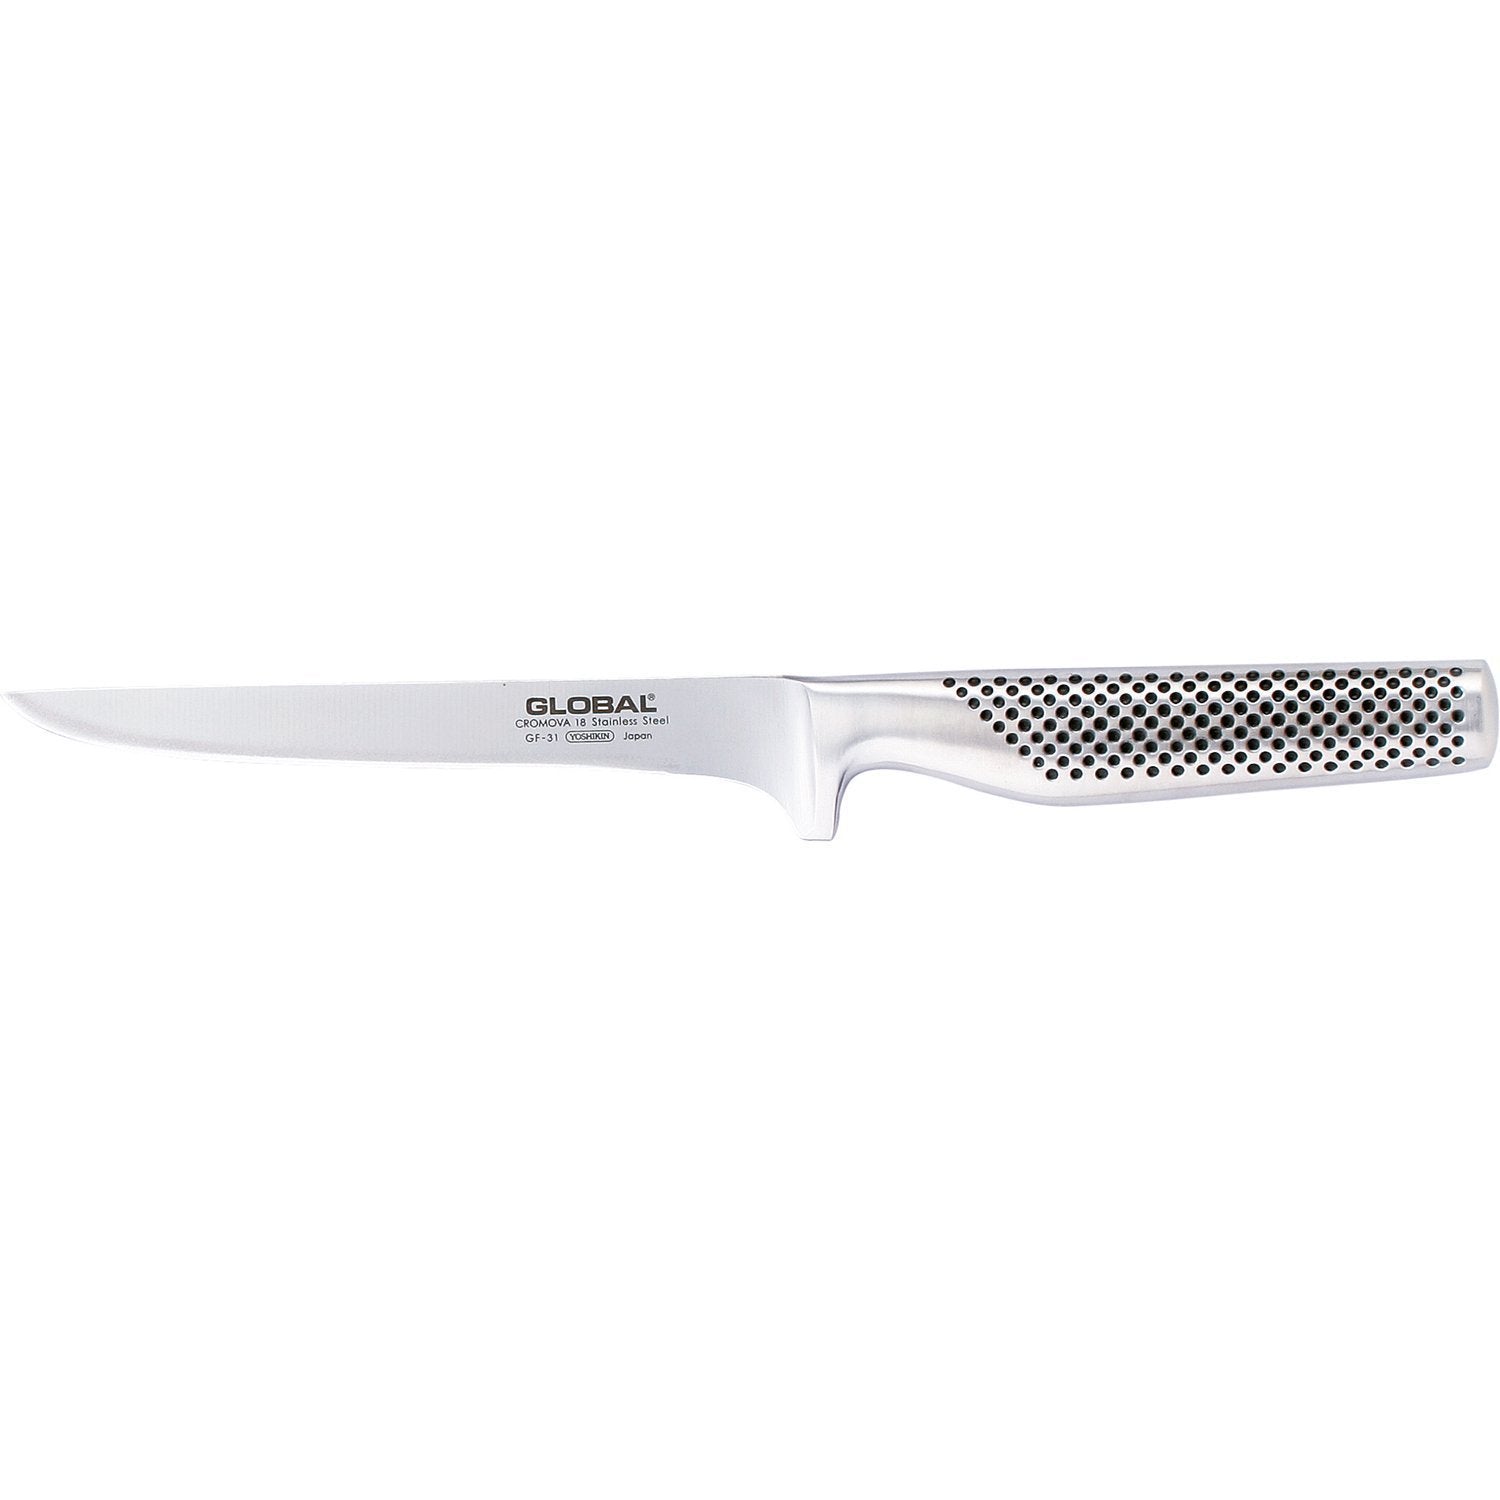 Global GF 31 Boning Knife sztywny, 16 cm